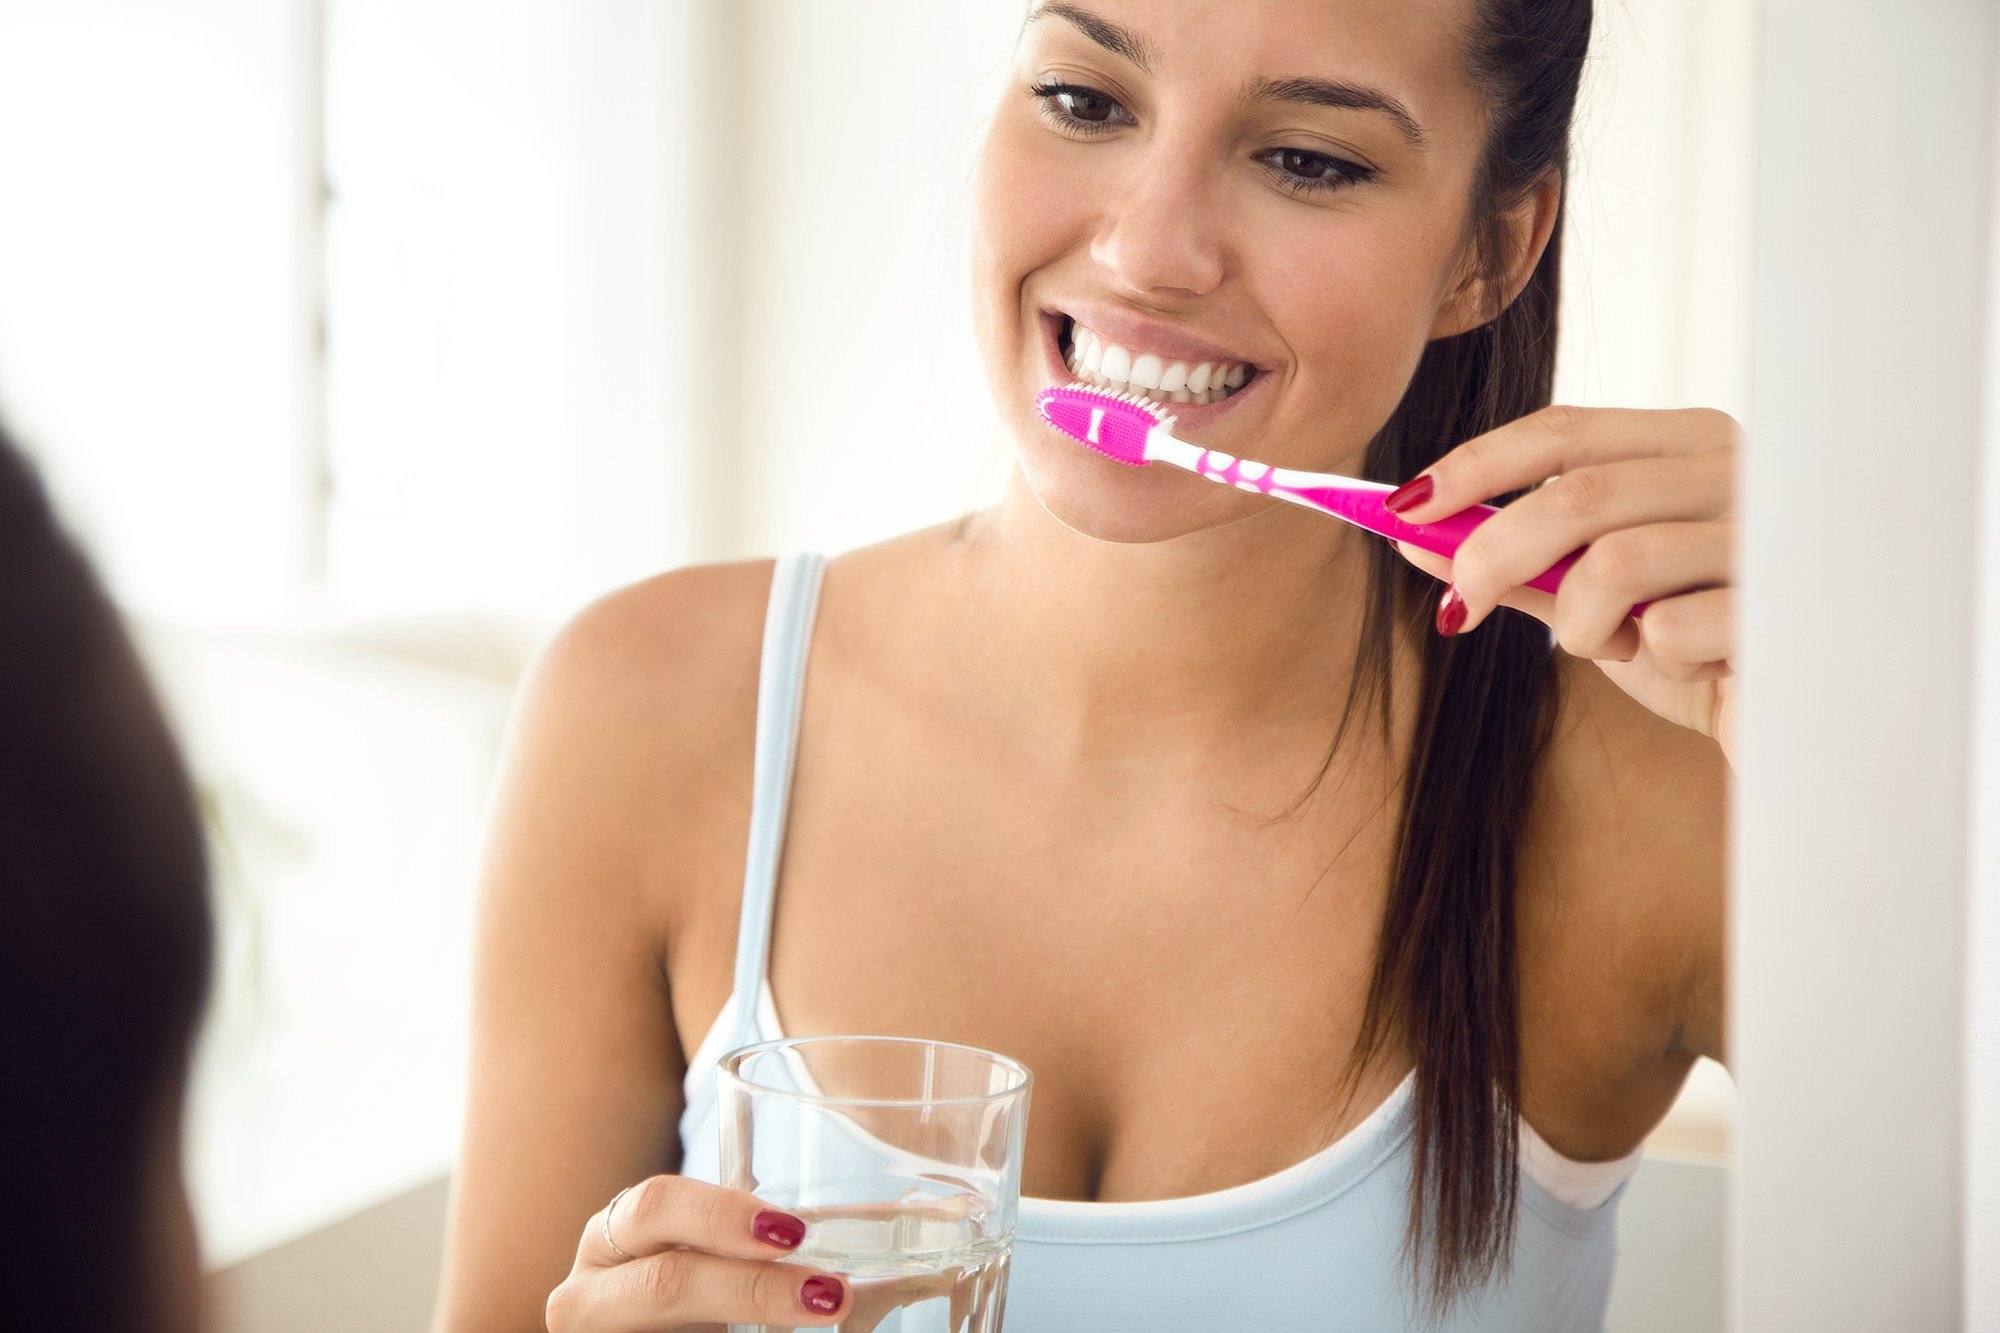 Cepillo de dientes: ¿manual o eléctrico? - Acosta Cubero